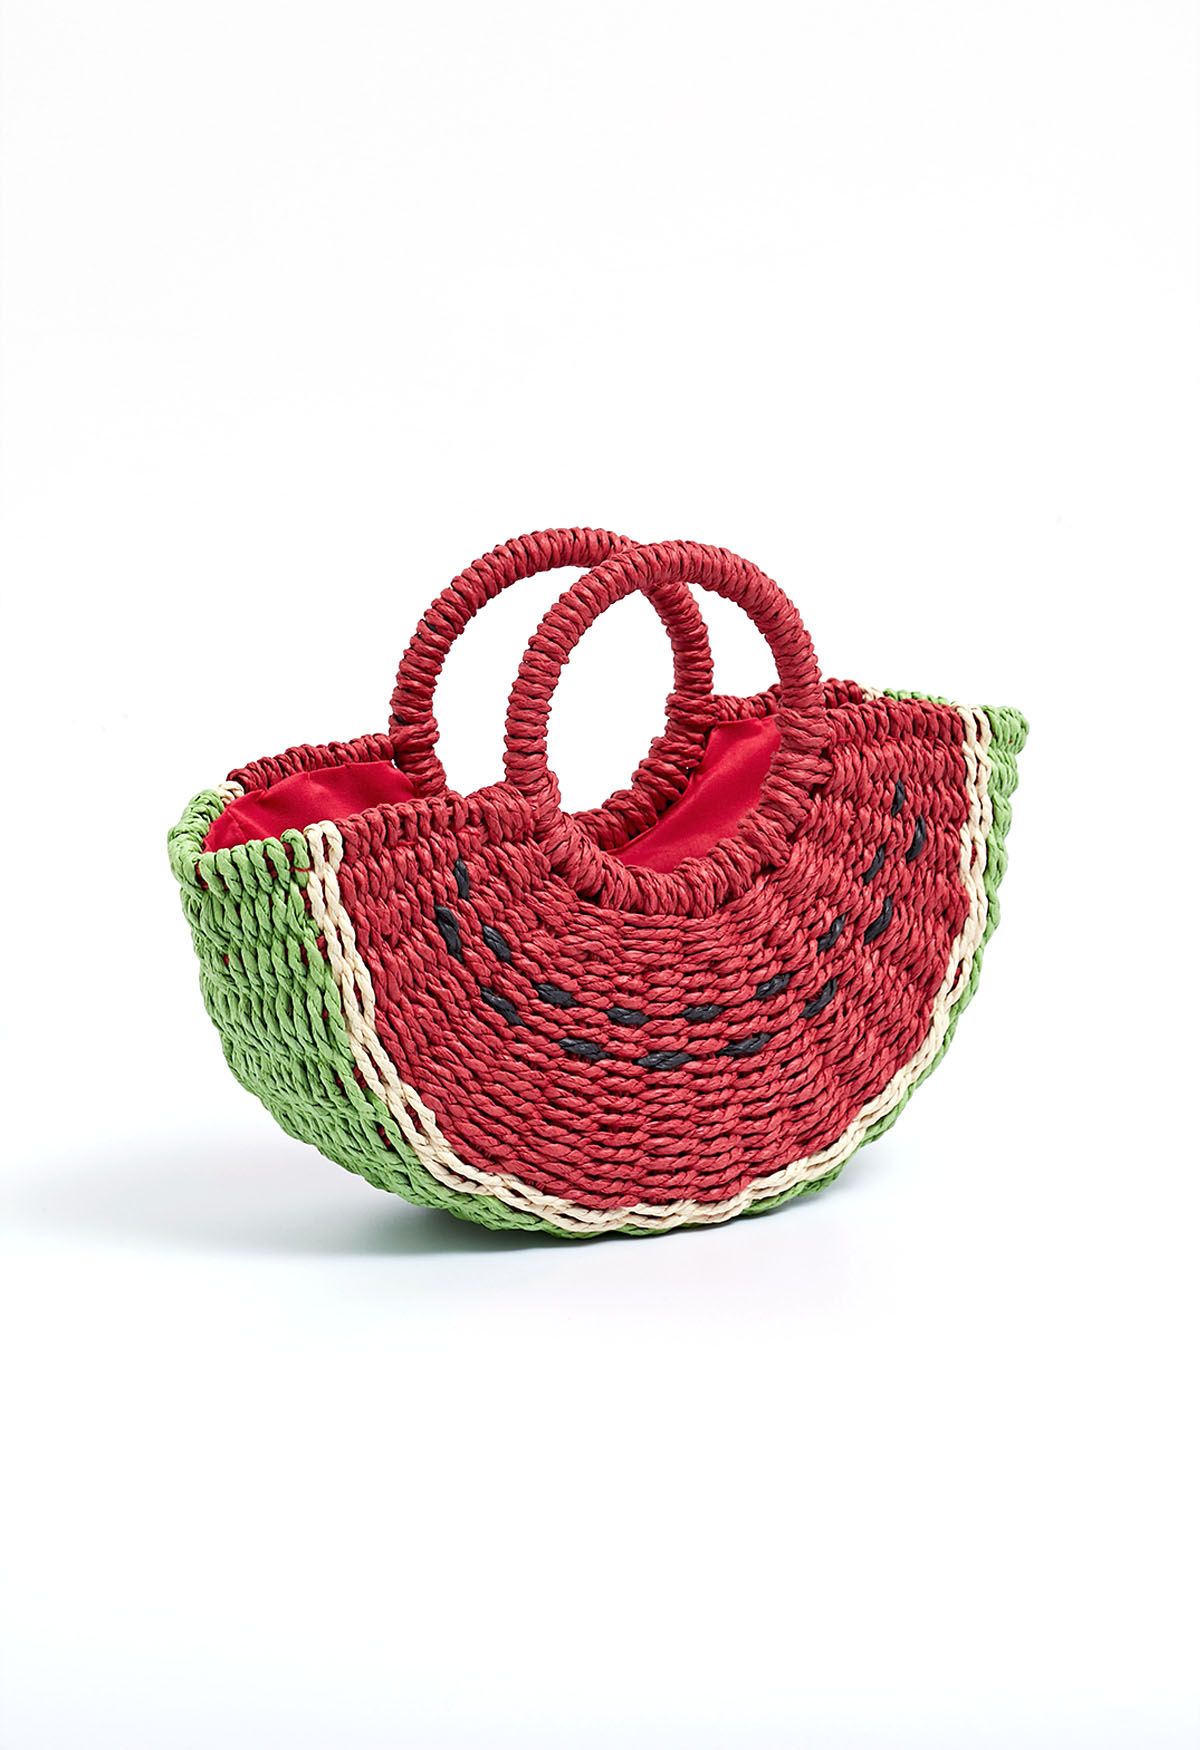 Watermelon Woven Straw Handbag